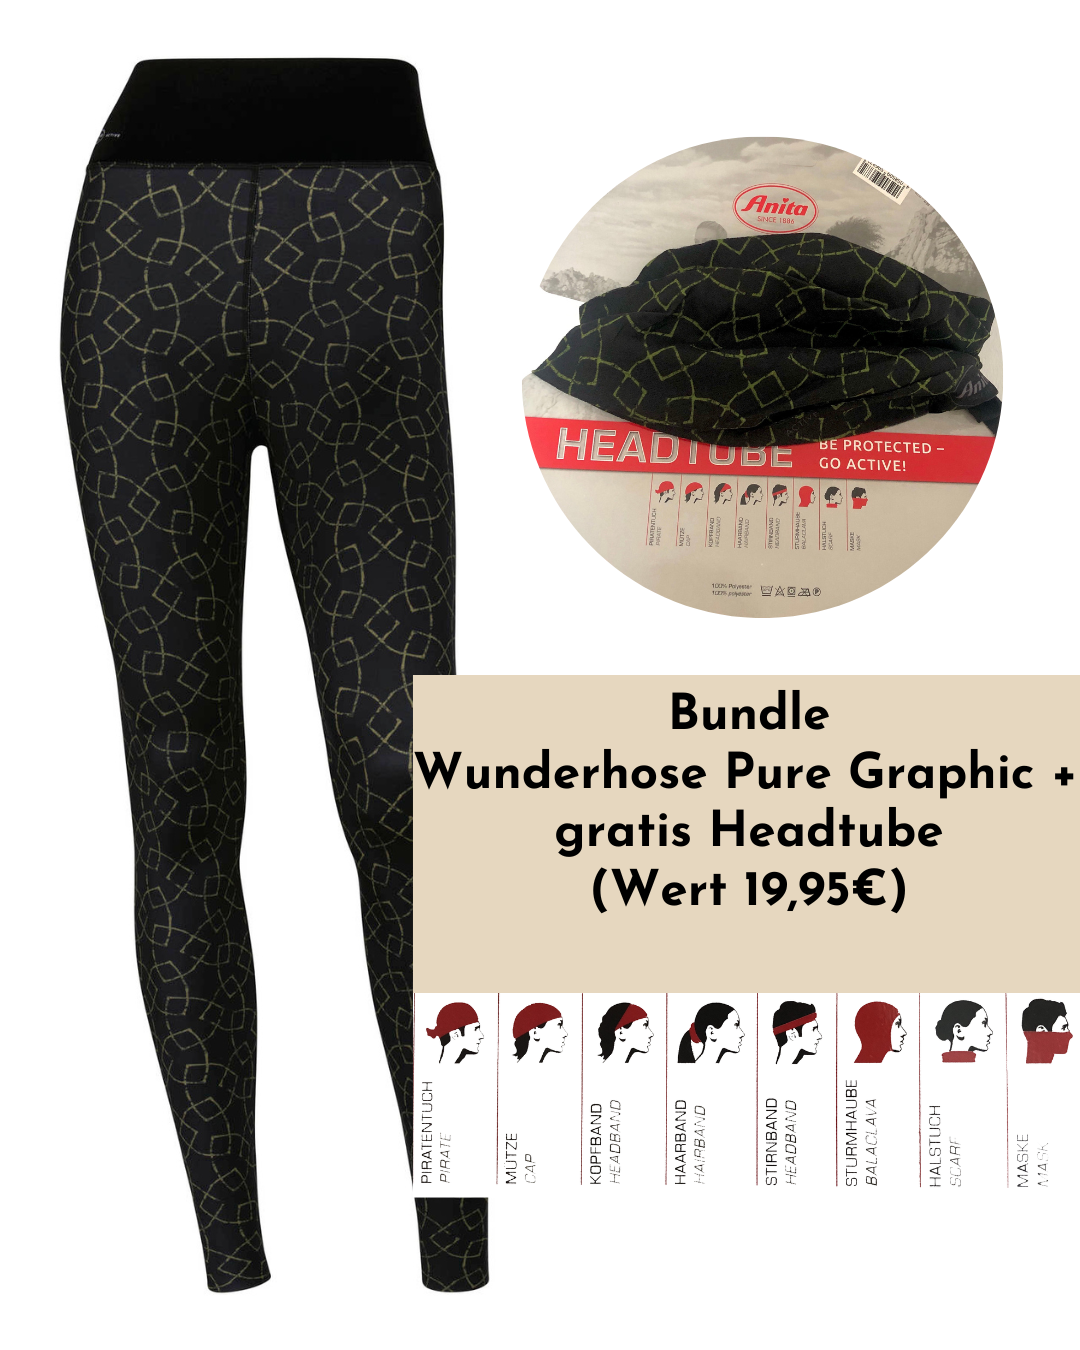 Bundle Wunderhose Pure Graphic + gratis Headtube